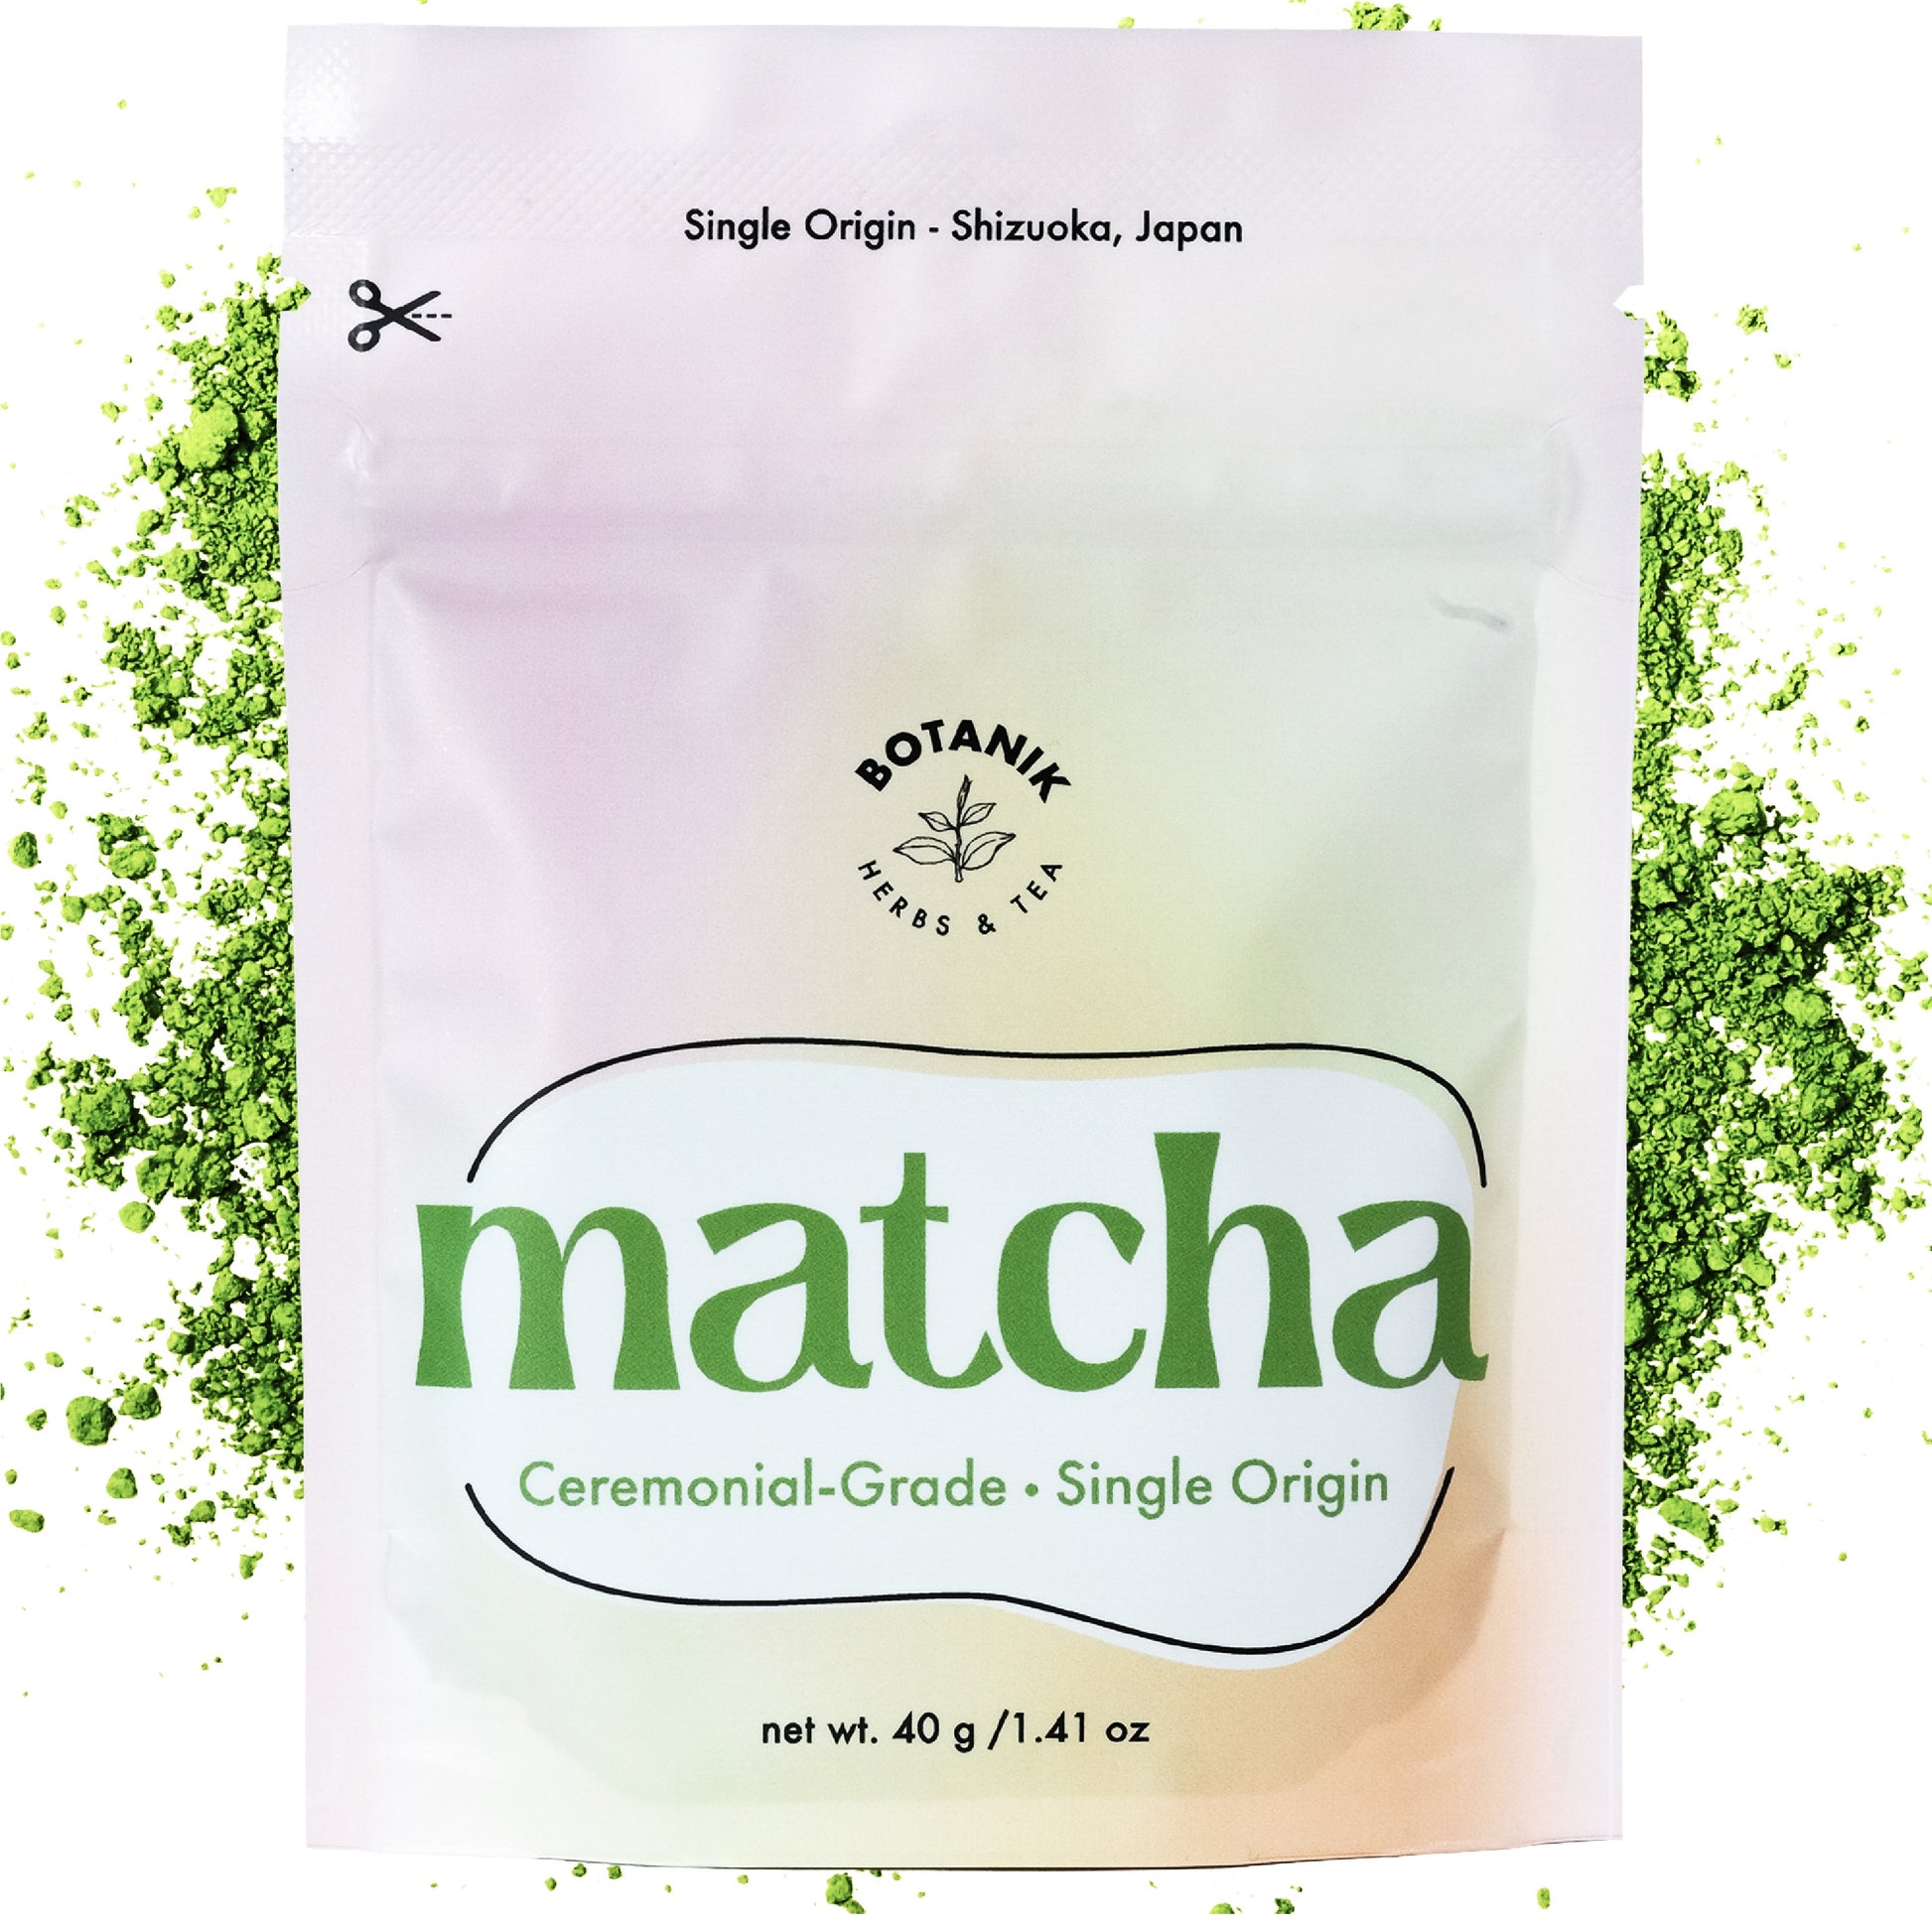 Jade Leaf Matcha Review - Matcha Connection